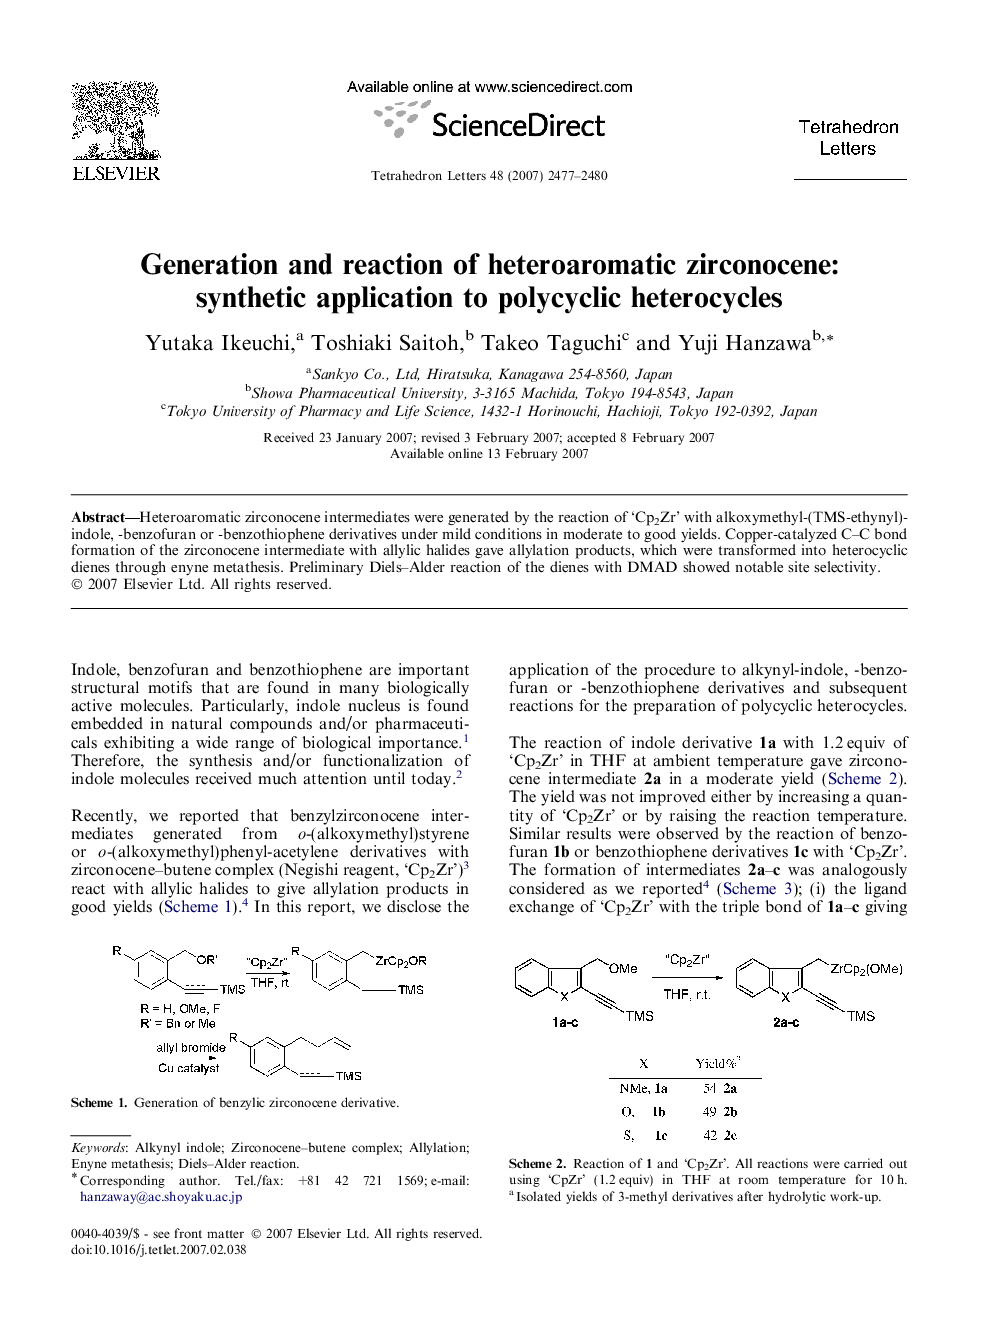 Generation and reaction of heteroaromatic zirconocene: synthetic application to polycyclic heterocycles